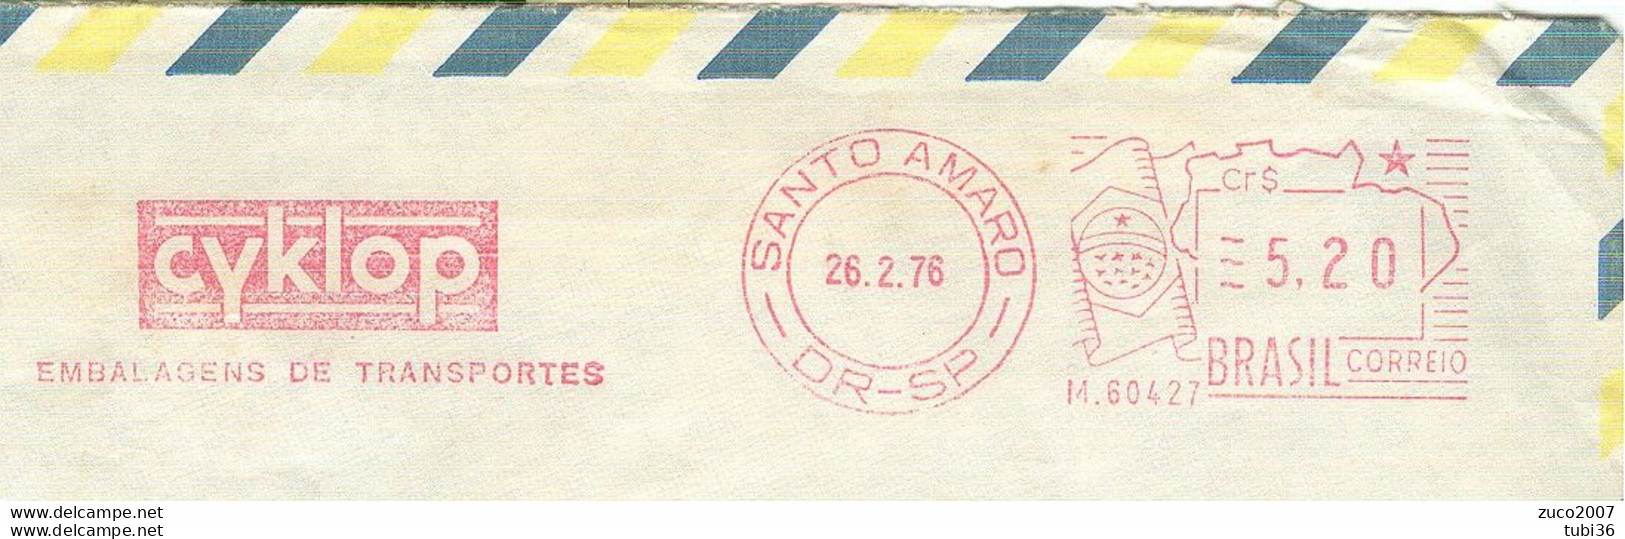 BRASILE -SAO PAULO - SANTO AMARO -CYKLOP S.A.-1976- BOLOGNA (ITALIA) - Automatenmarken (Frama)